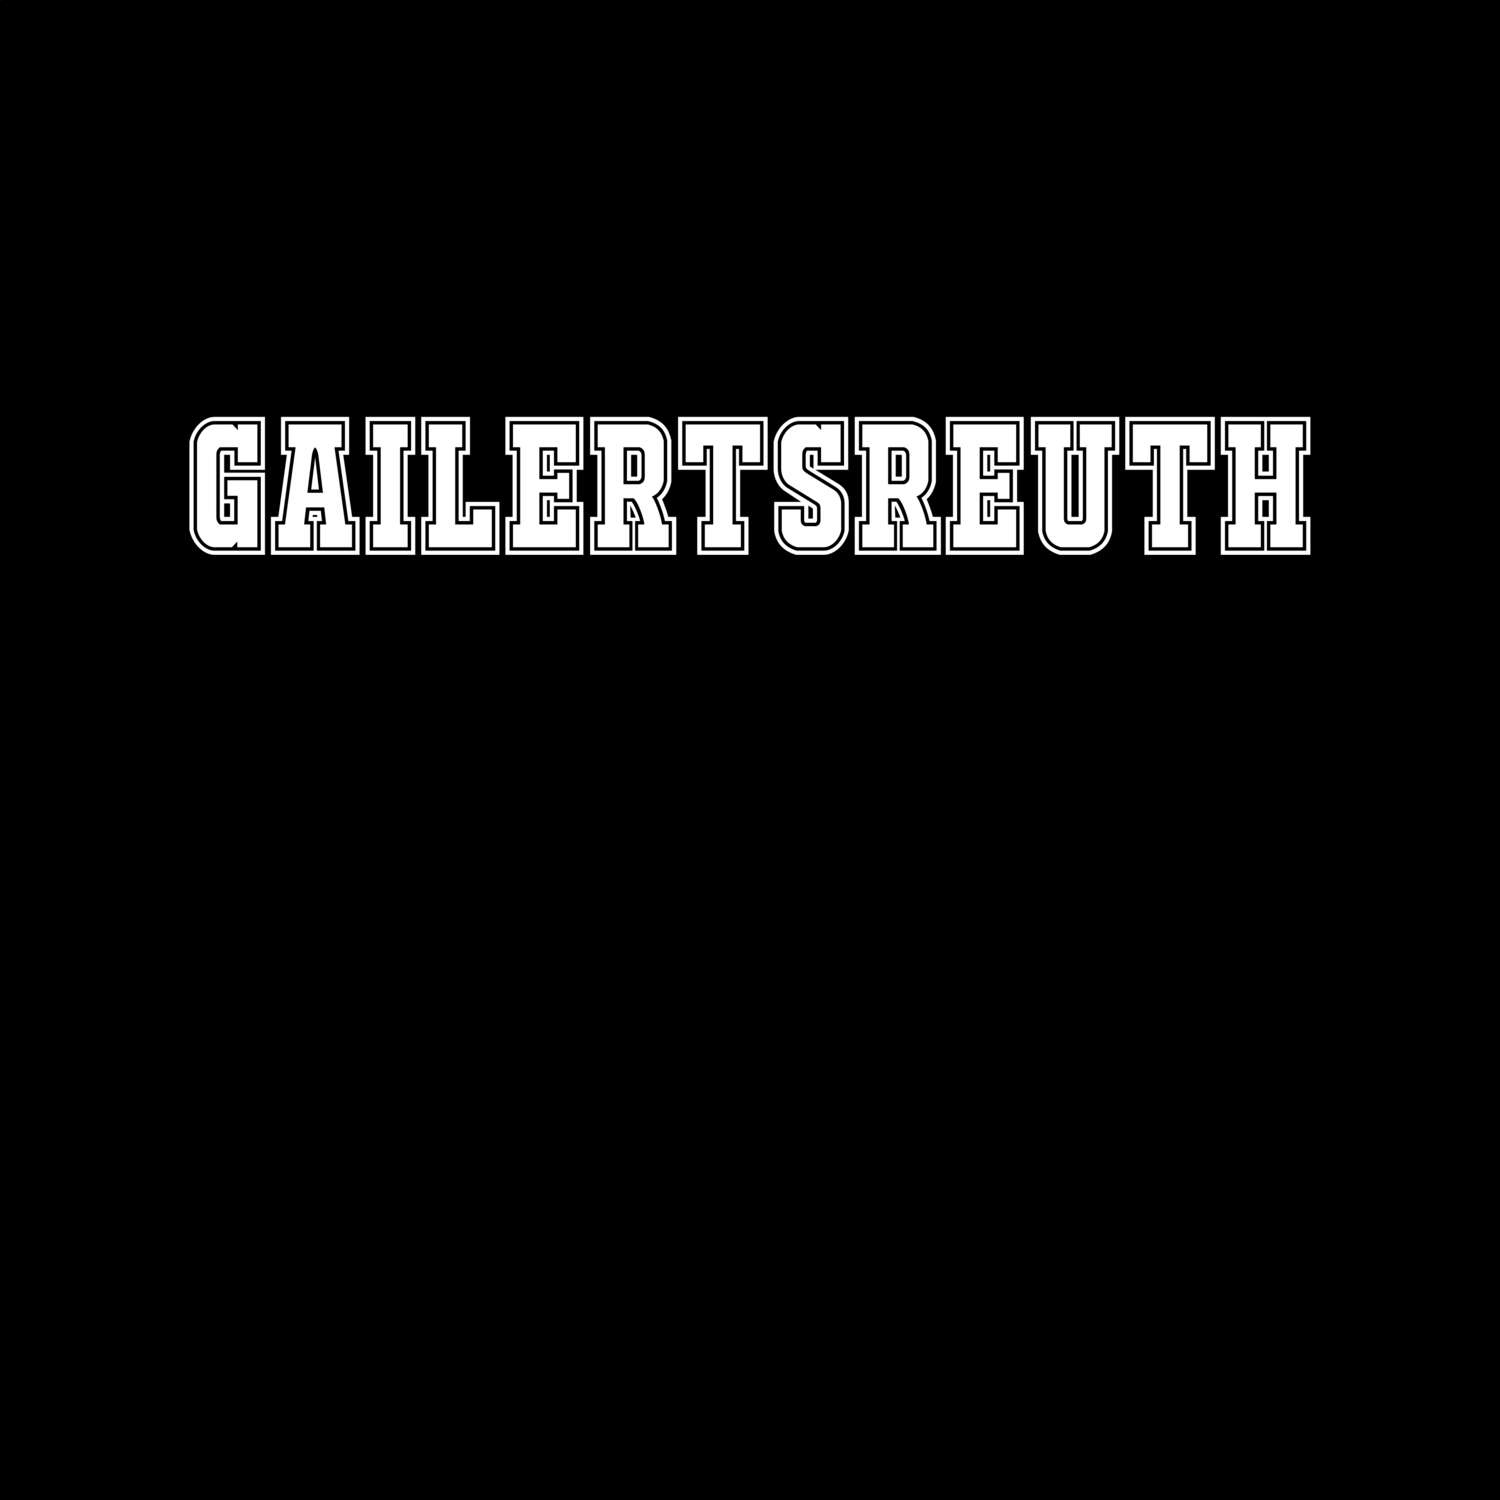 Gailertsreuth T-Shirt »Classic«